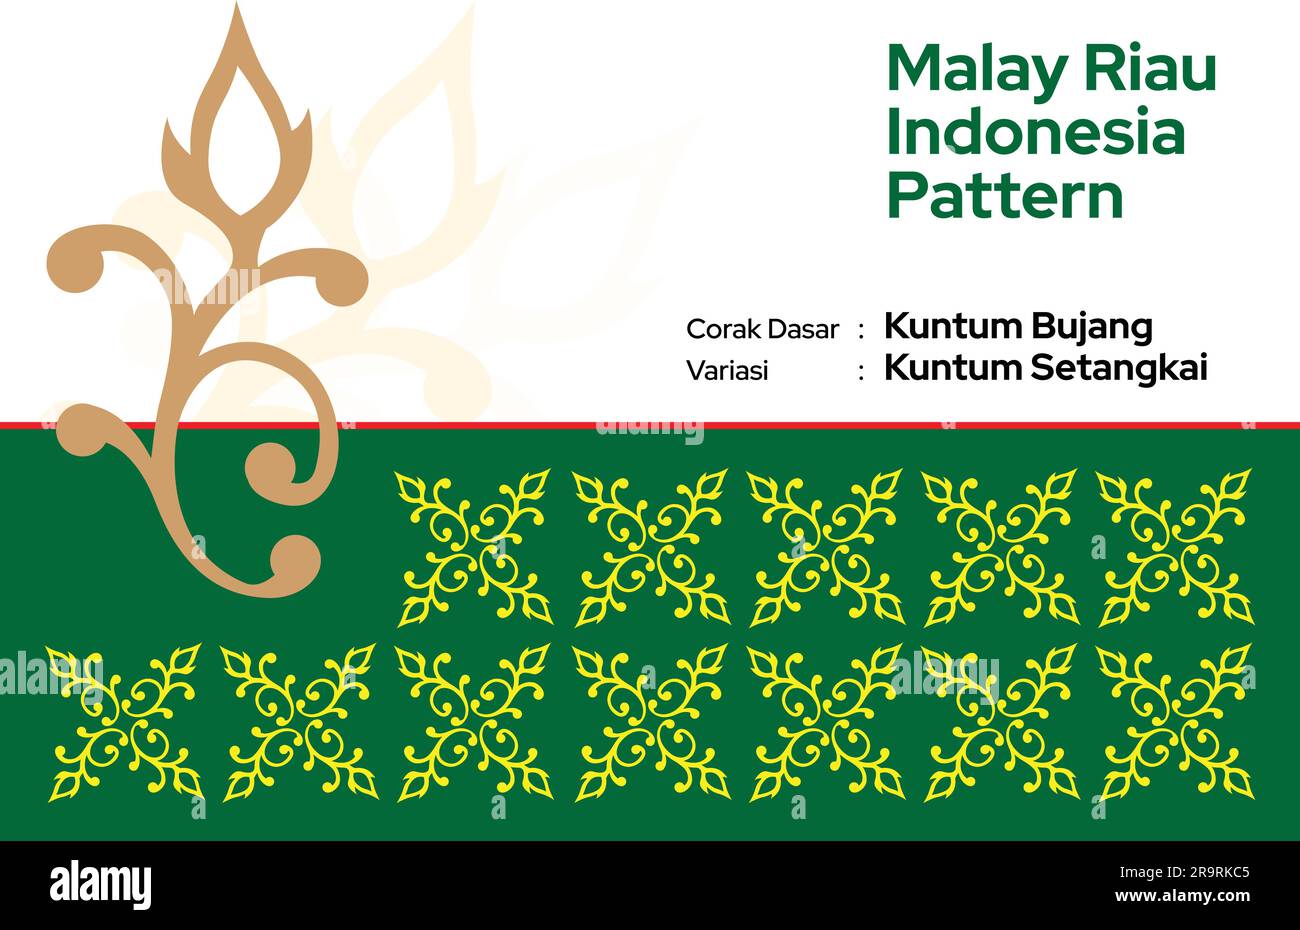 Pattern Malay Riau Batik Songket Tenun, Weaving Motif Corak dan ragi Kuntum Bujang Setangkai Melayu Stock Vector